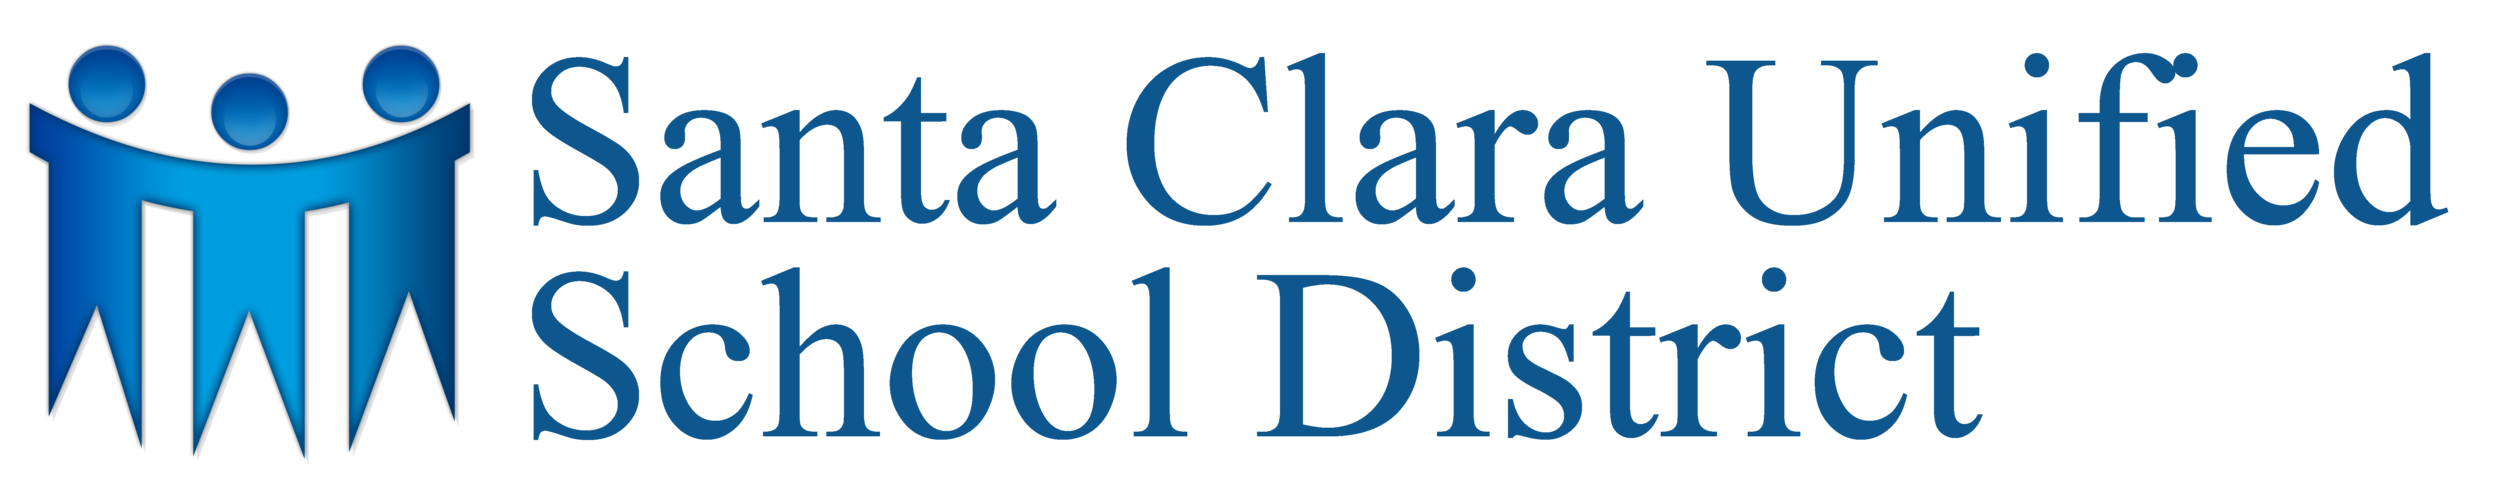 Santa Clara Unified School District.png